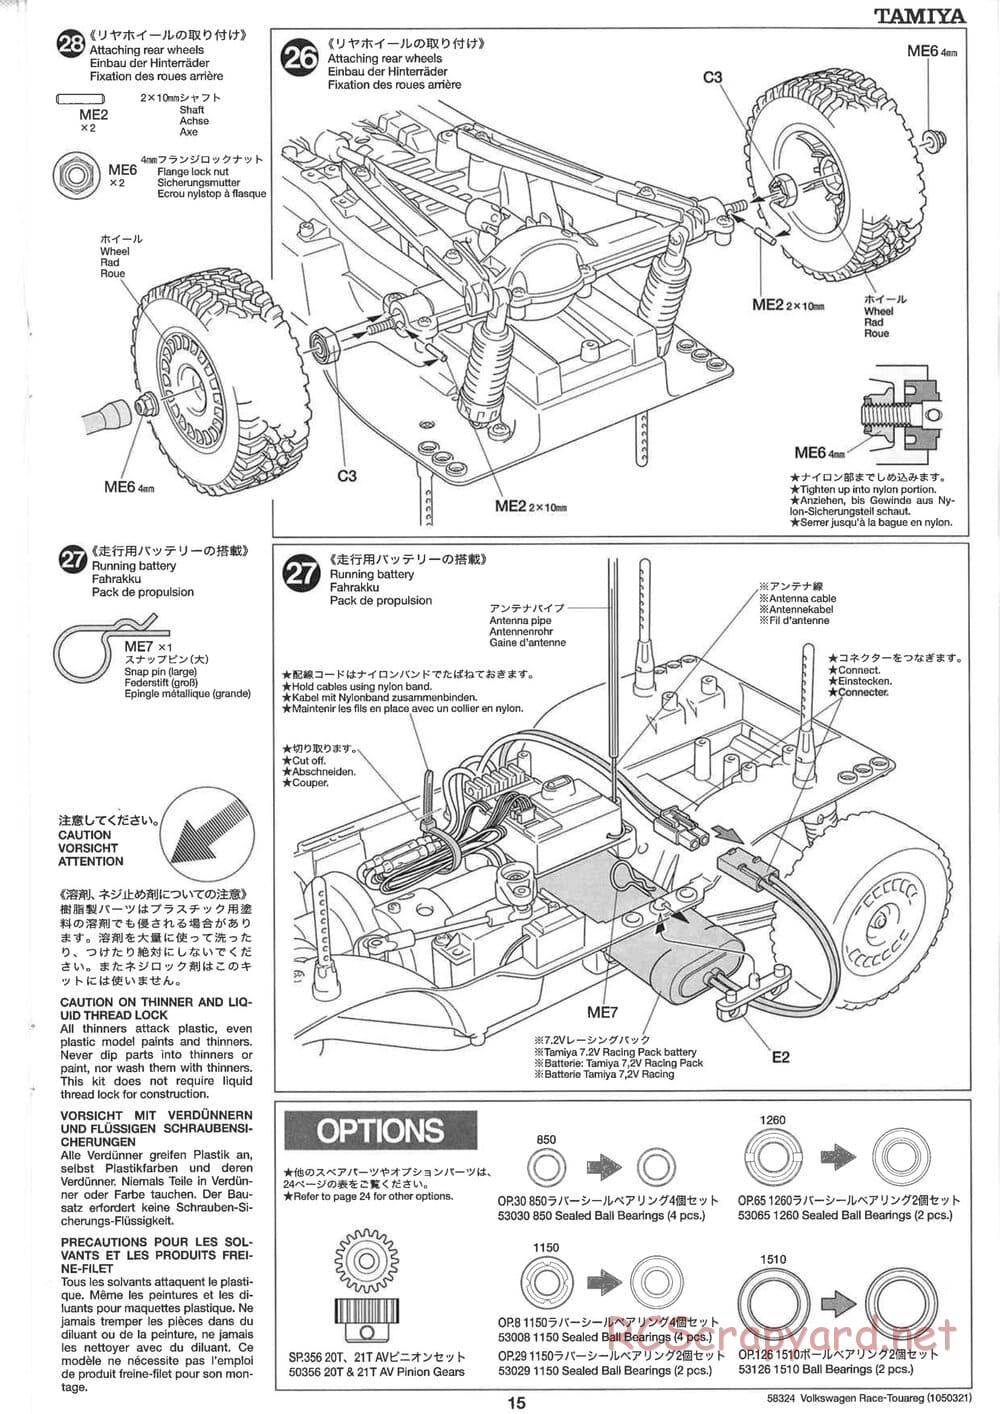 Tamiya - Volkswagen Race-Touareg - CC-01 Chassis - Manual - Page 15